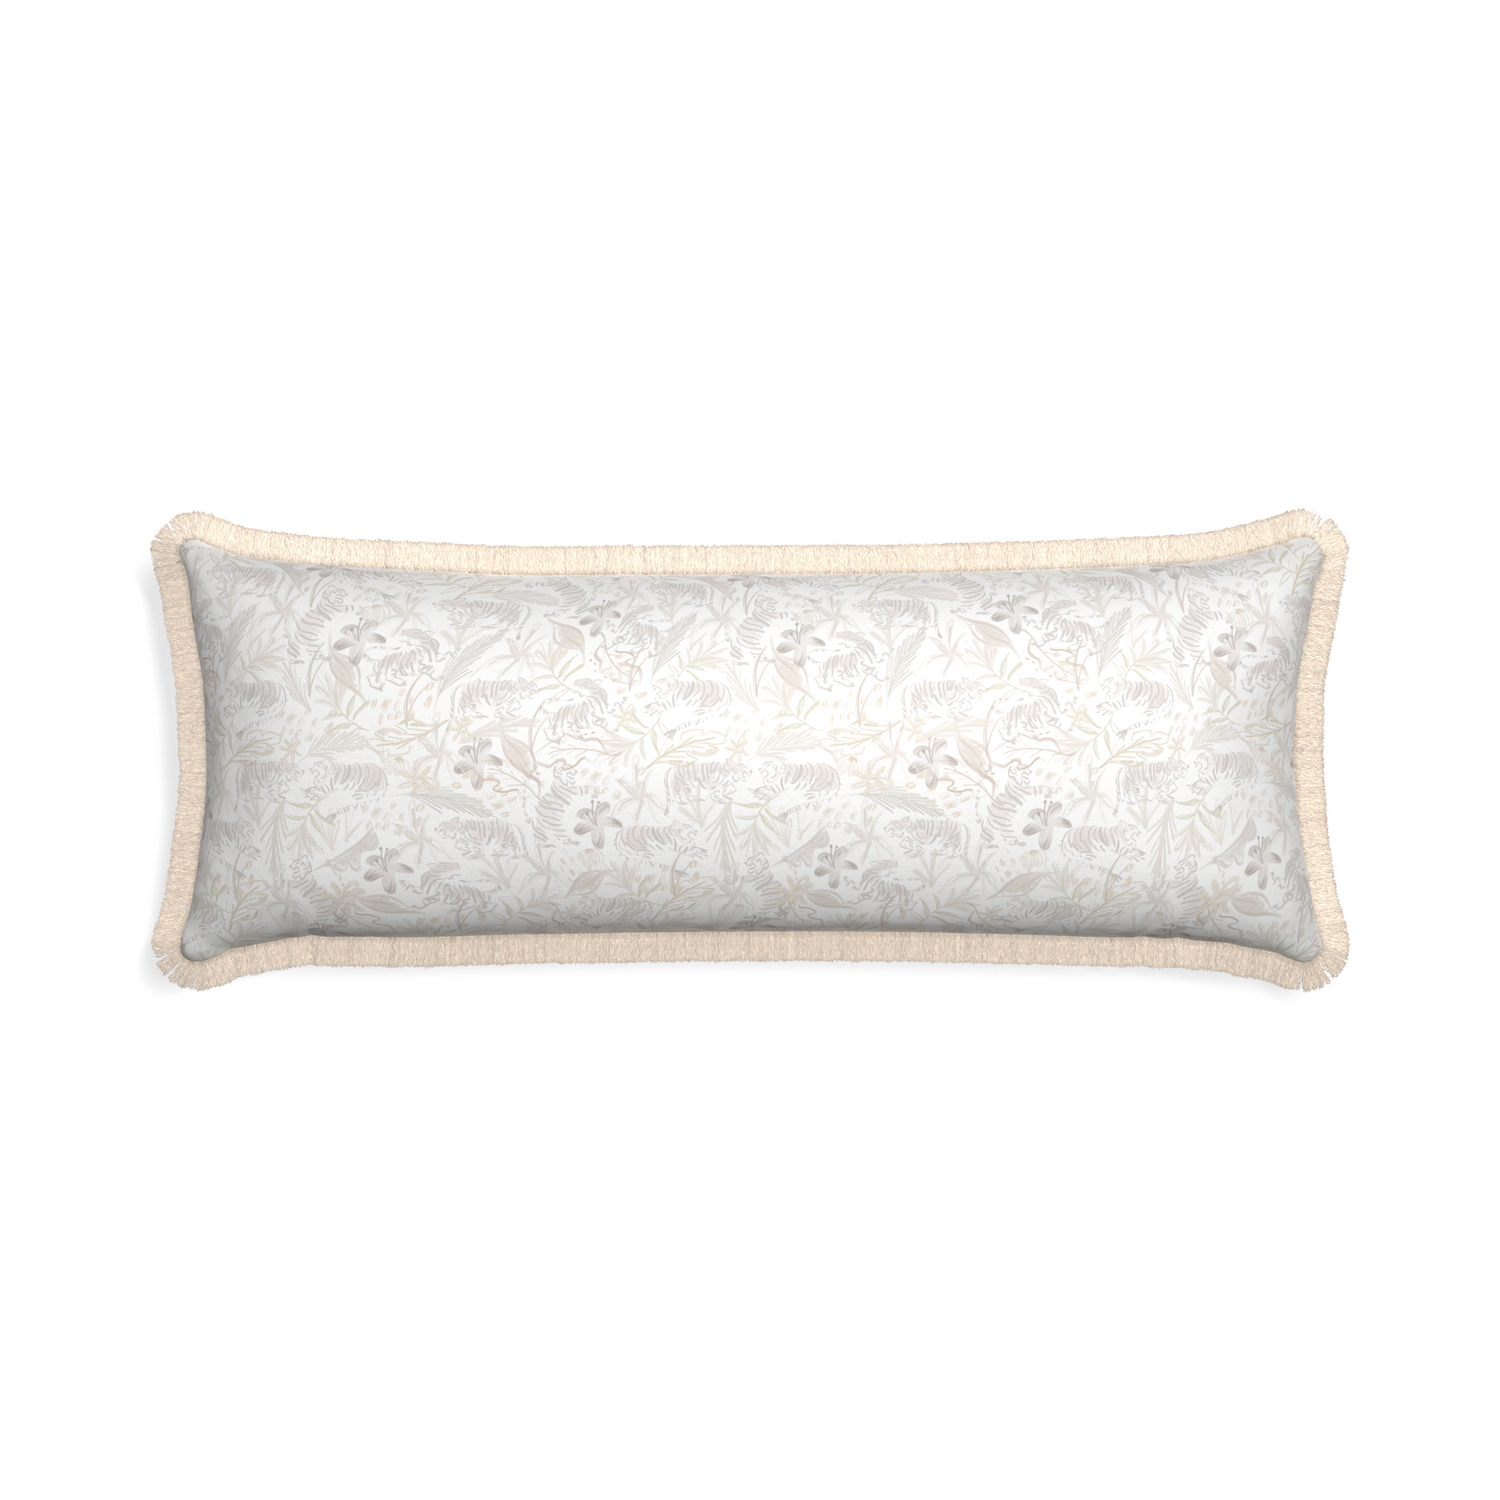 Xl-lumbar frida sand custom pillow with cream fringe on white background